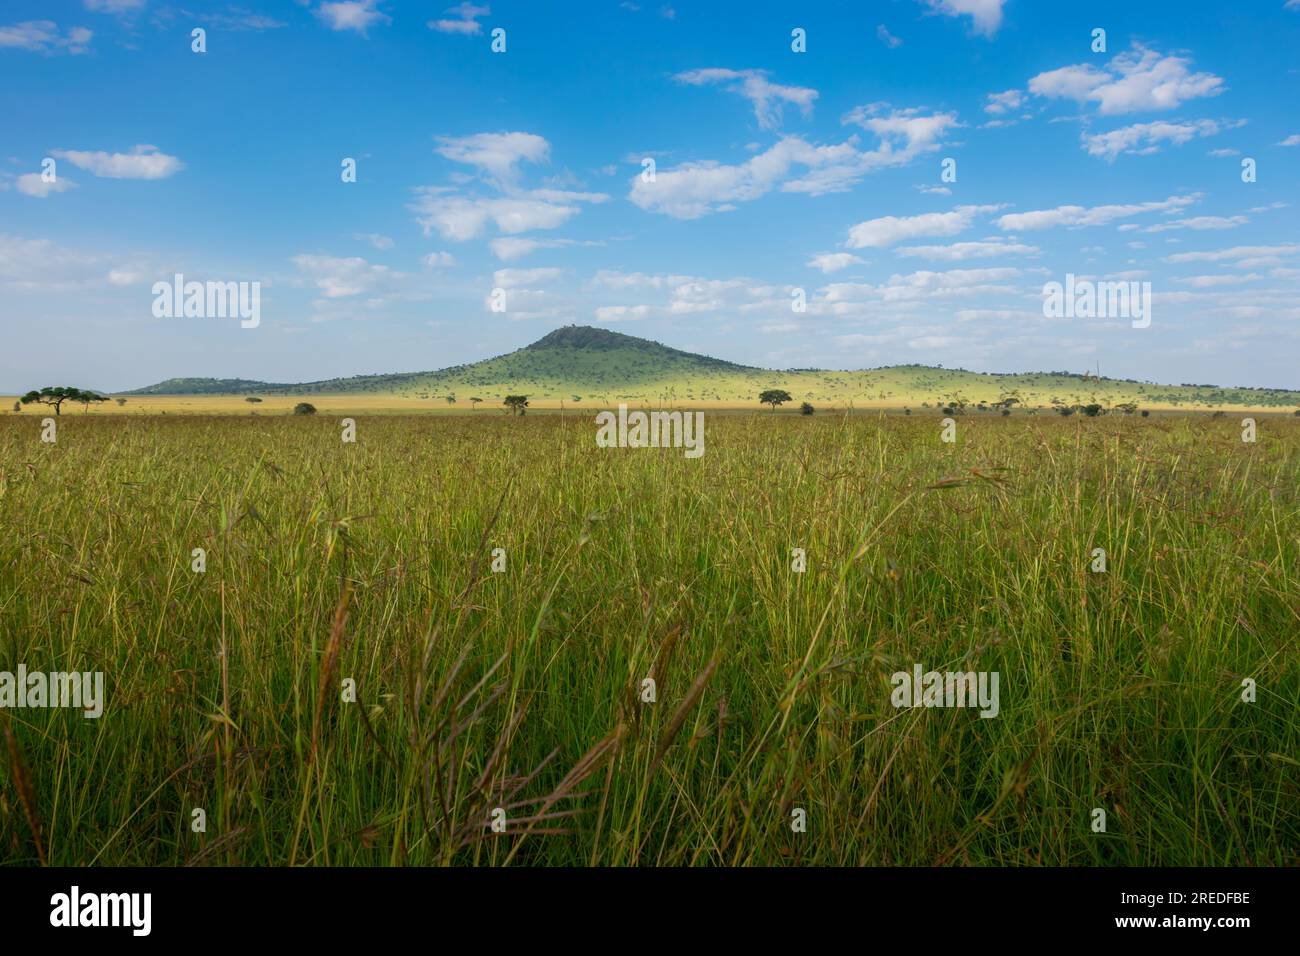 Afrikanische Safari-Landschaft Stockfoto